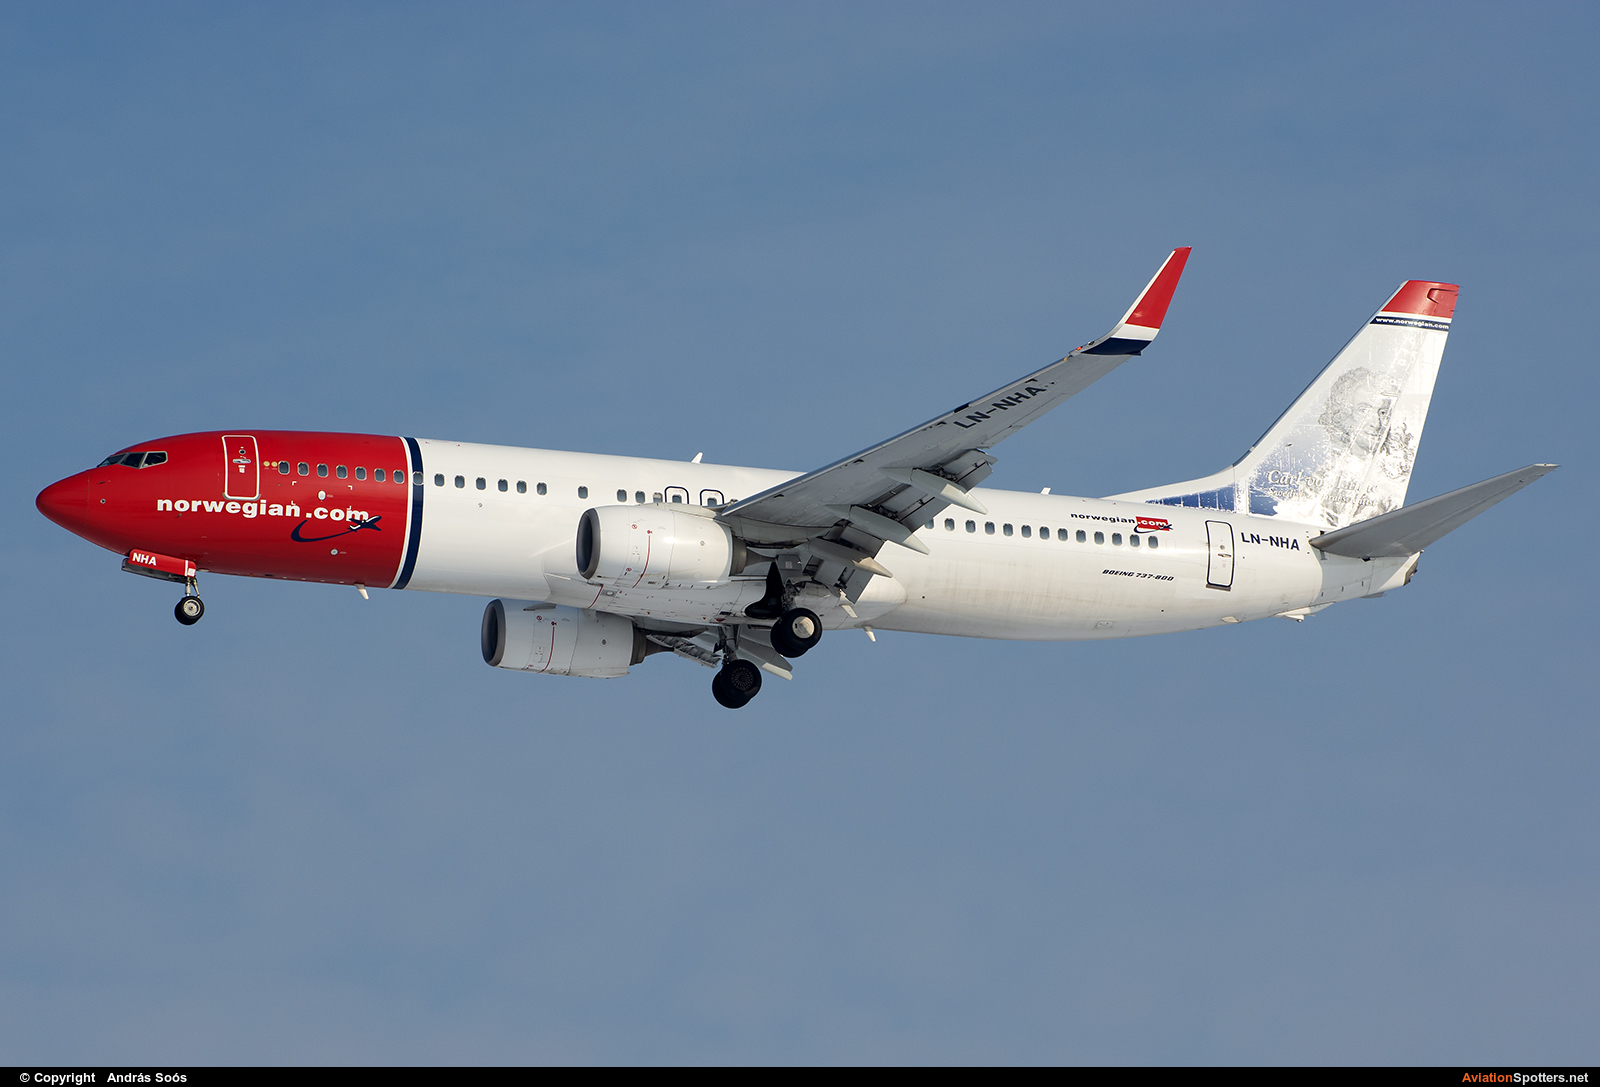 Norwegian Air Shuttle  -  737-800  (LN-NHA) By András Soós (sas1965)